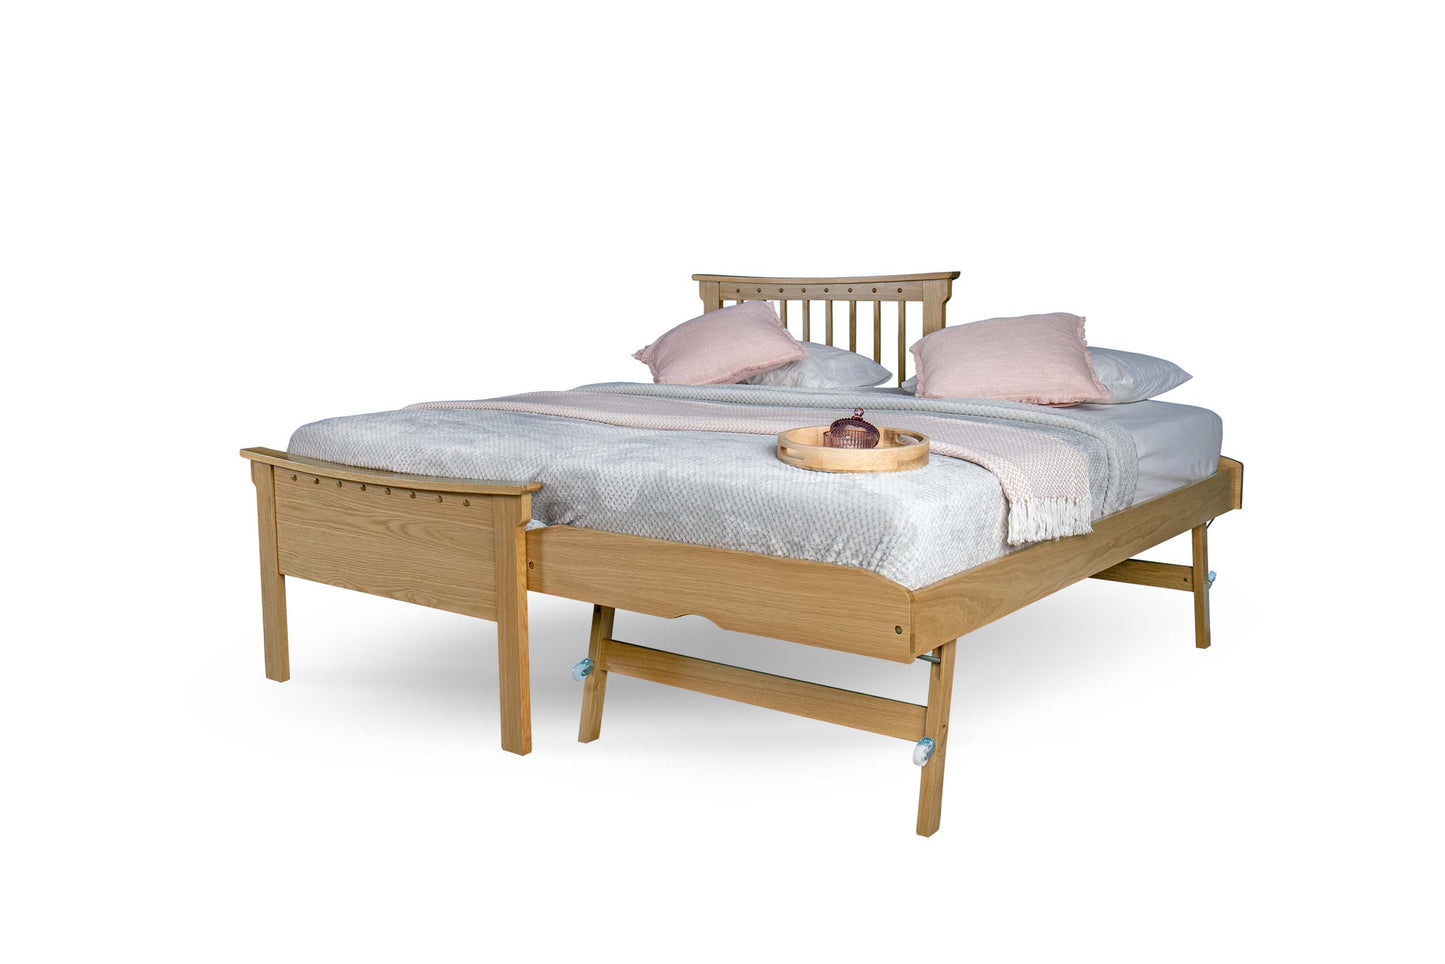 Pemberley Guest Bed - 3ft Single - Natural Oak